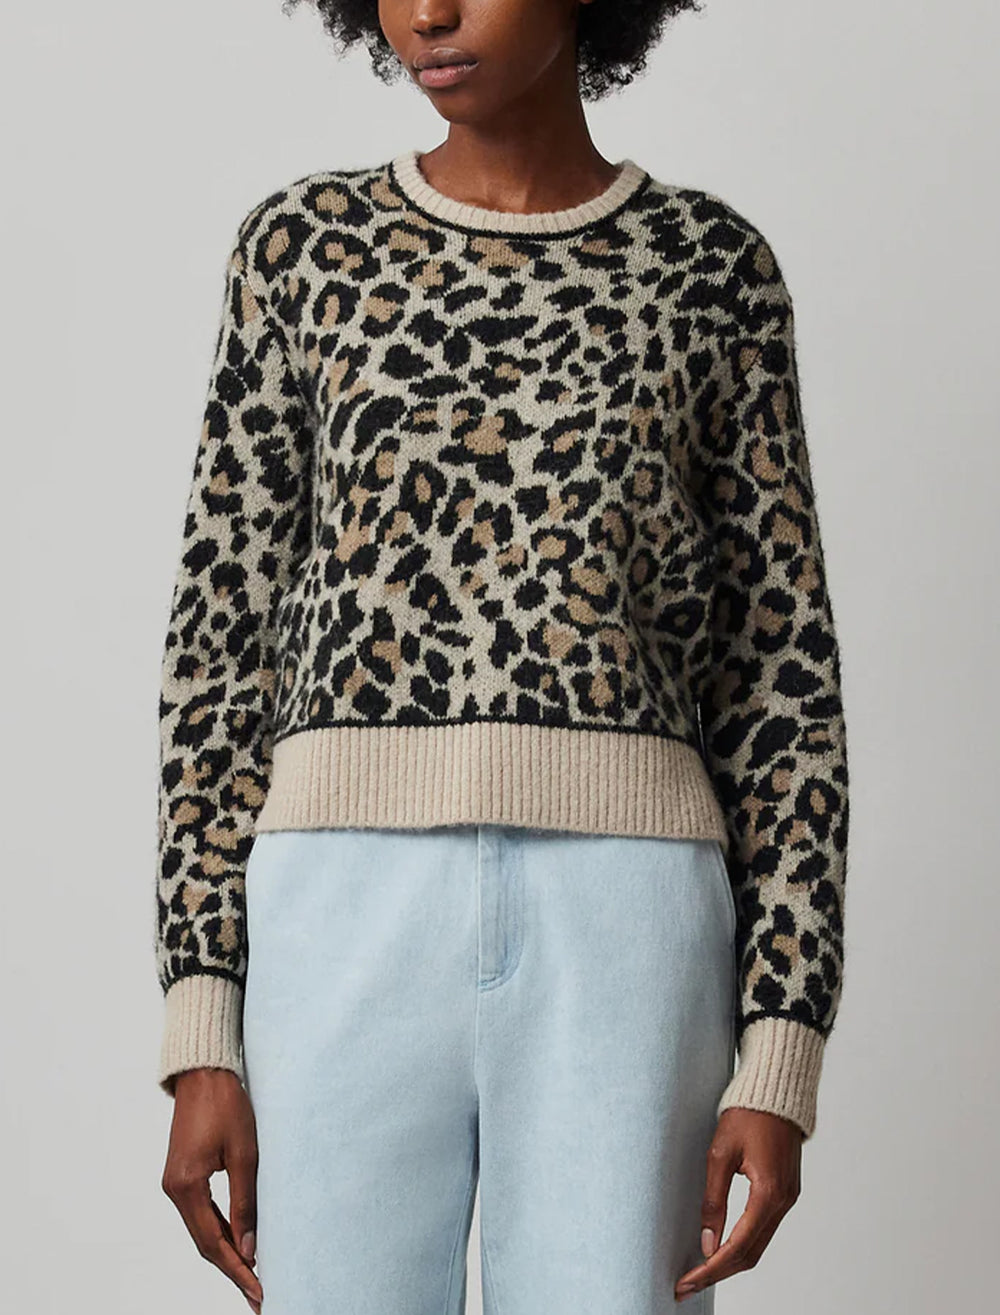 Model wearing ATM's leopard jacquard pullover.